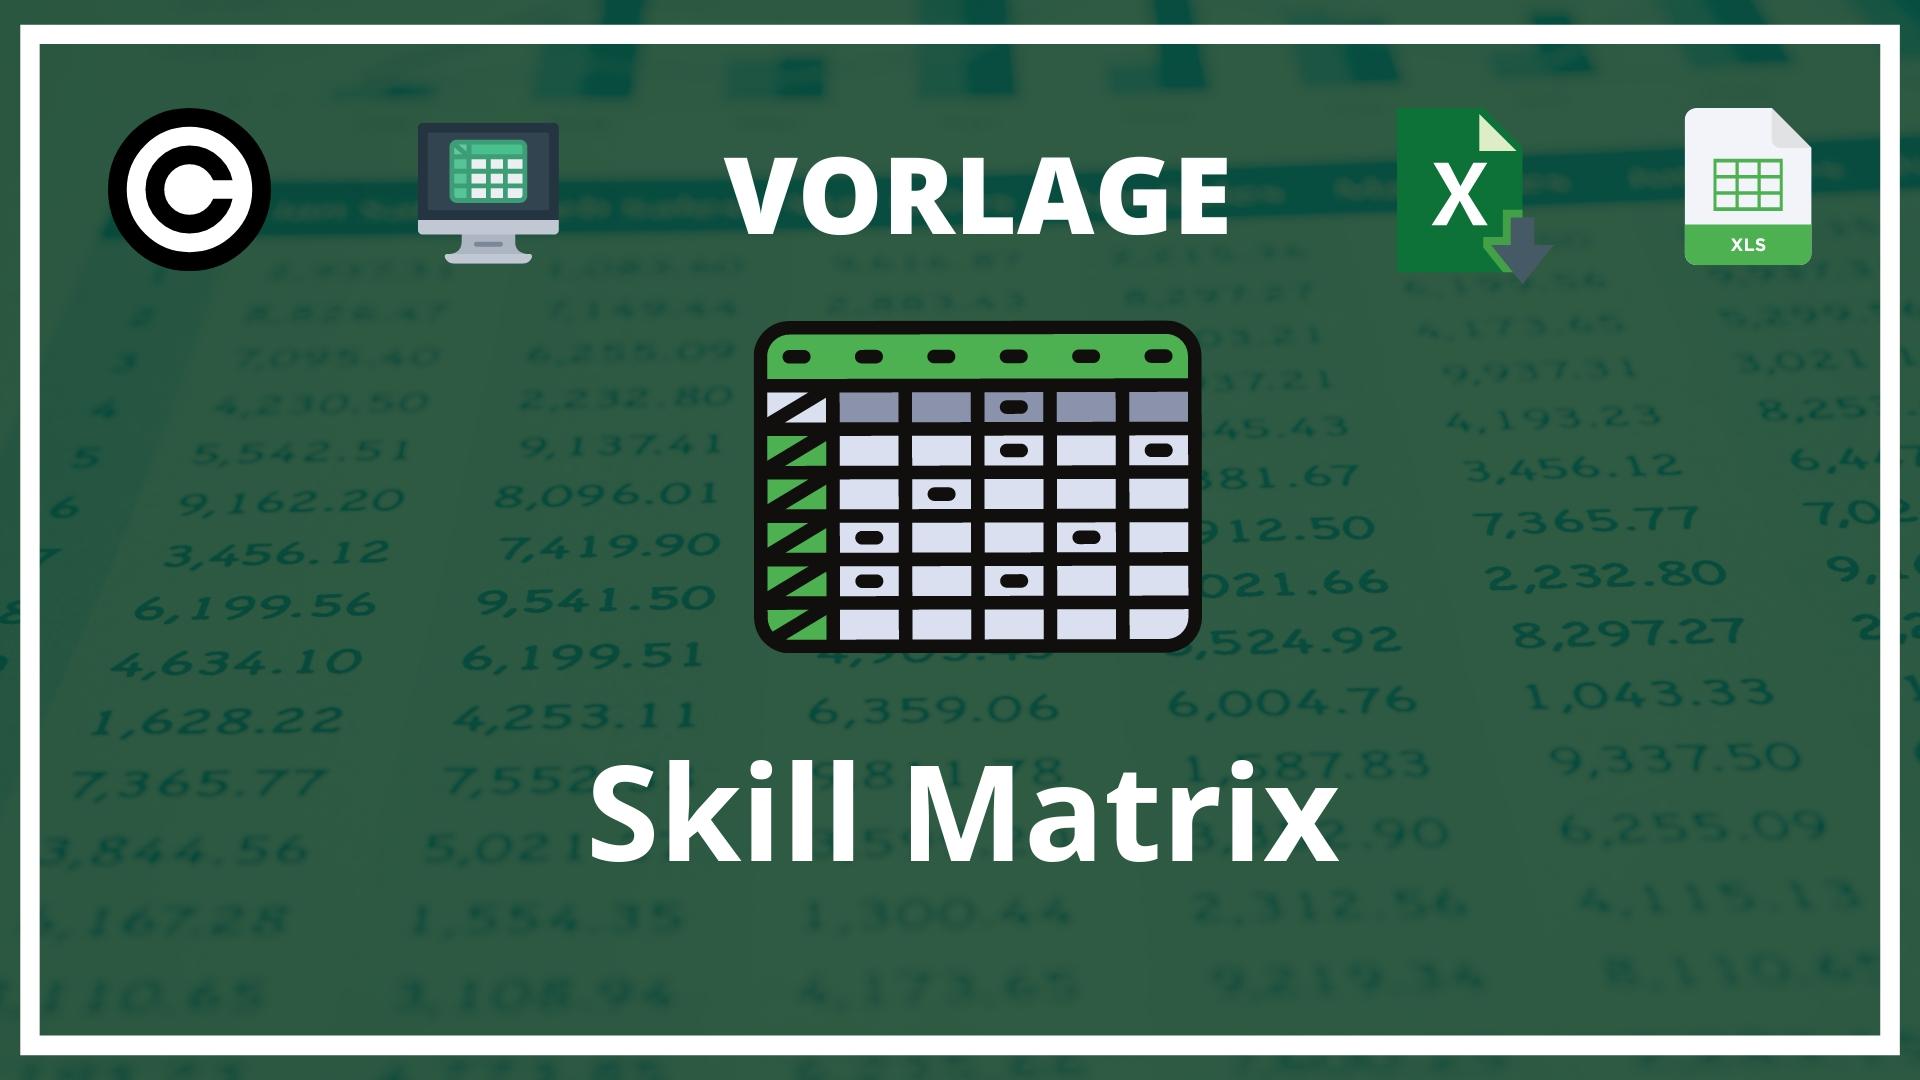 Skill Matrix Vorlage Excel